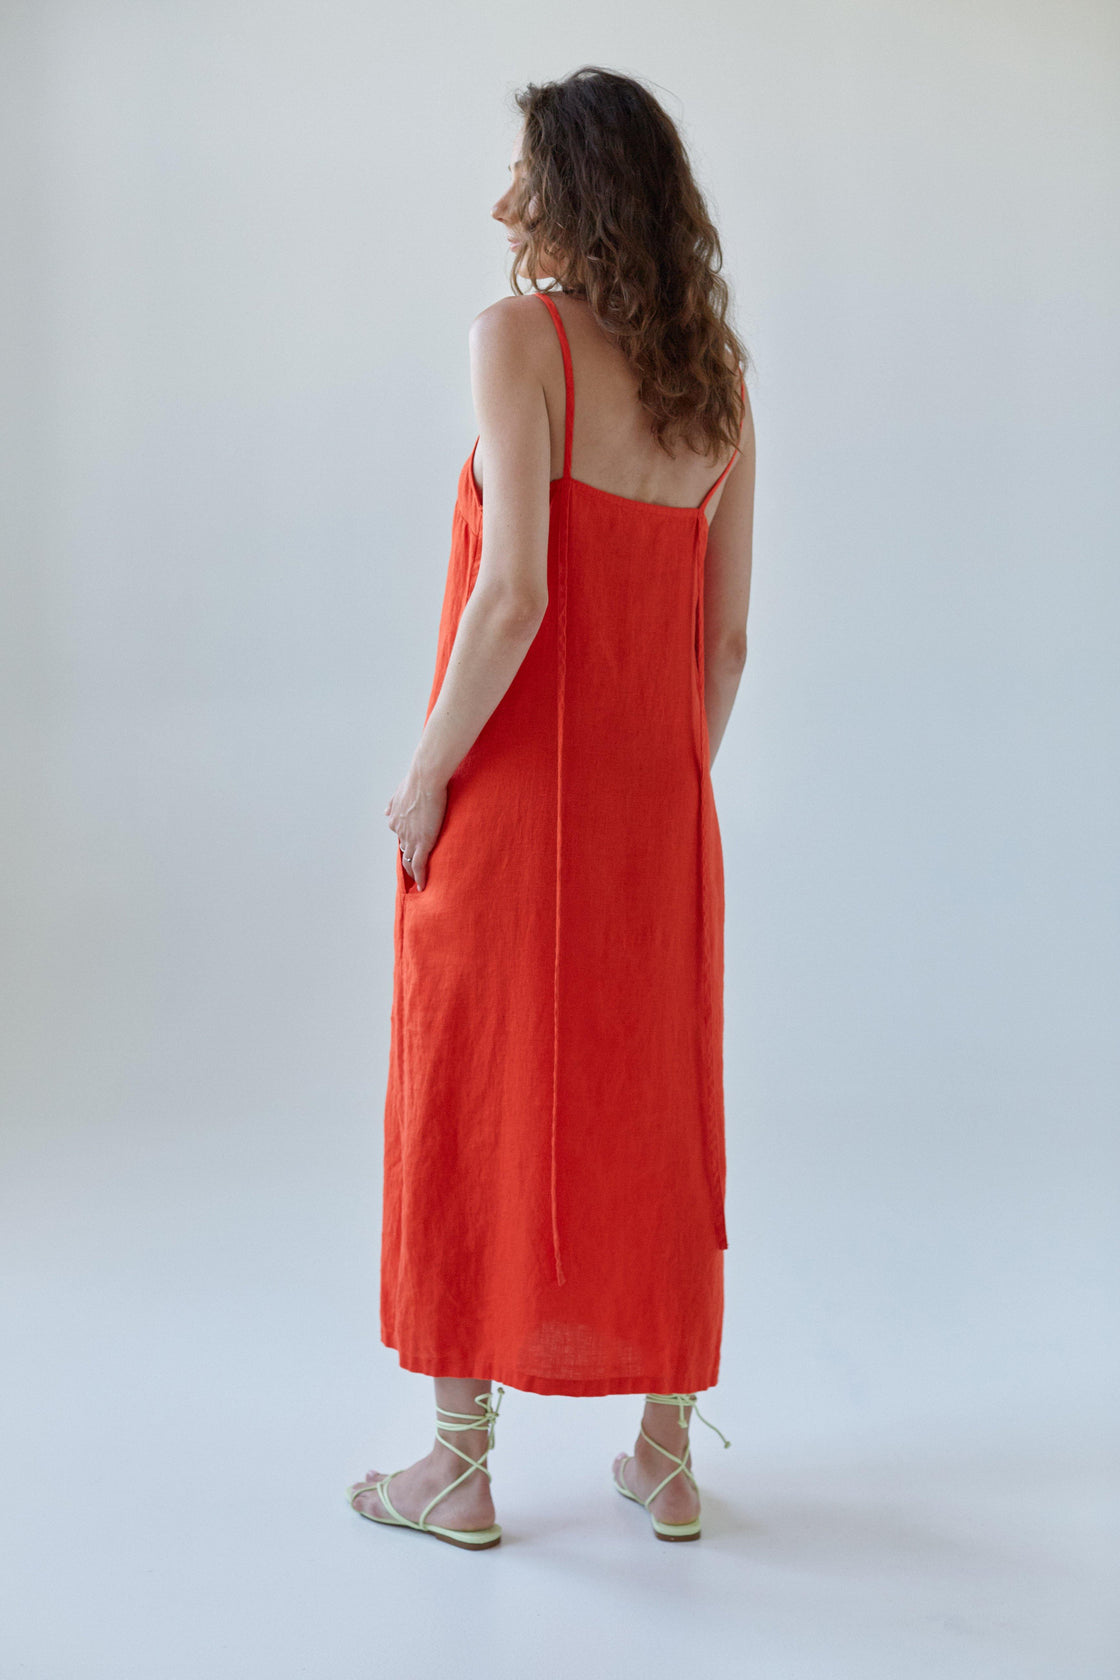 women's orange summer dress